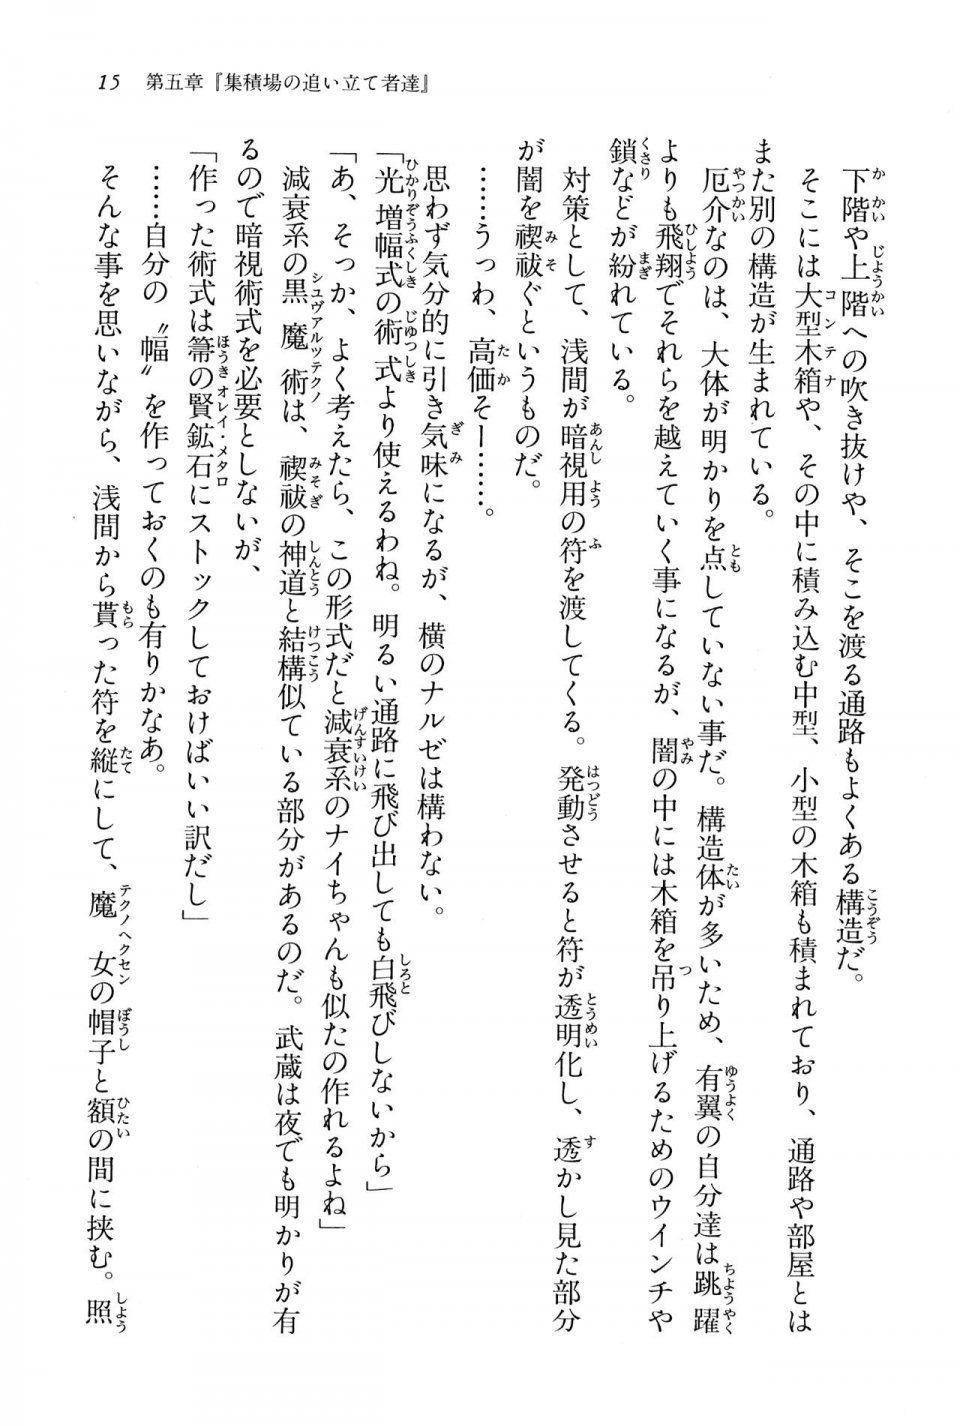 Kyoukai Senjou no Horizon BD Special Mininovel Vol 6(3B) - Photo #19